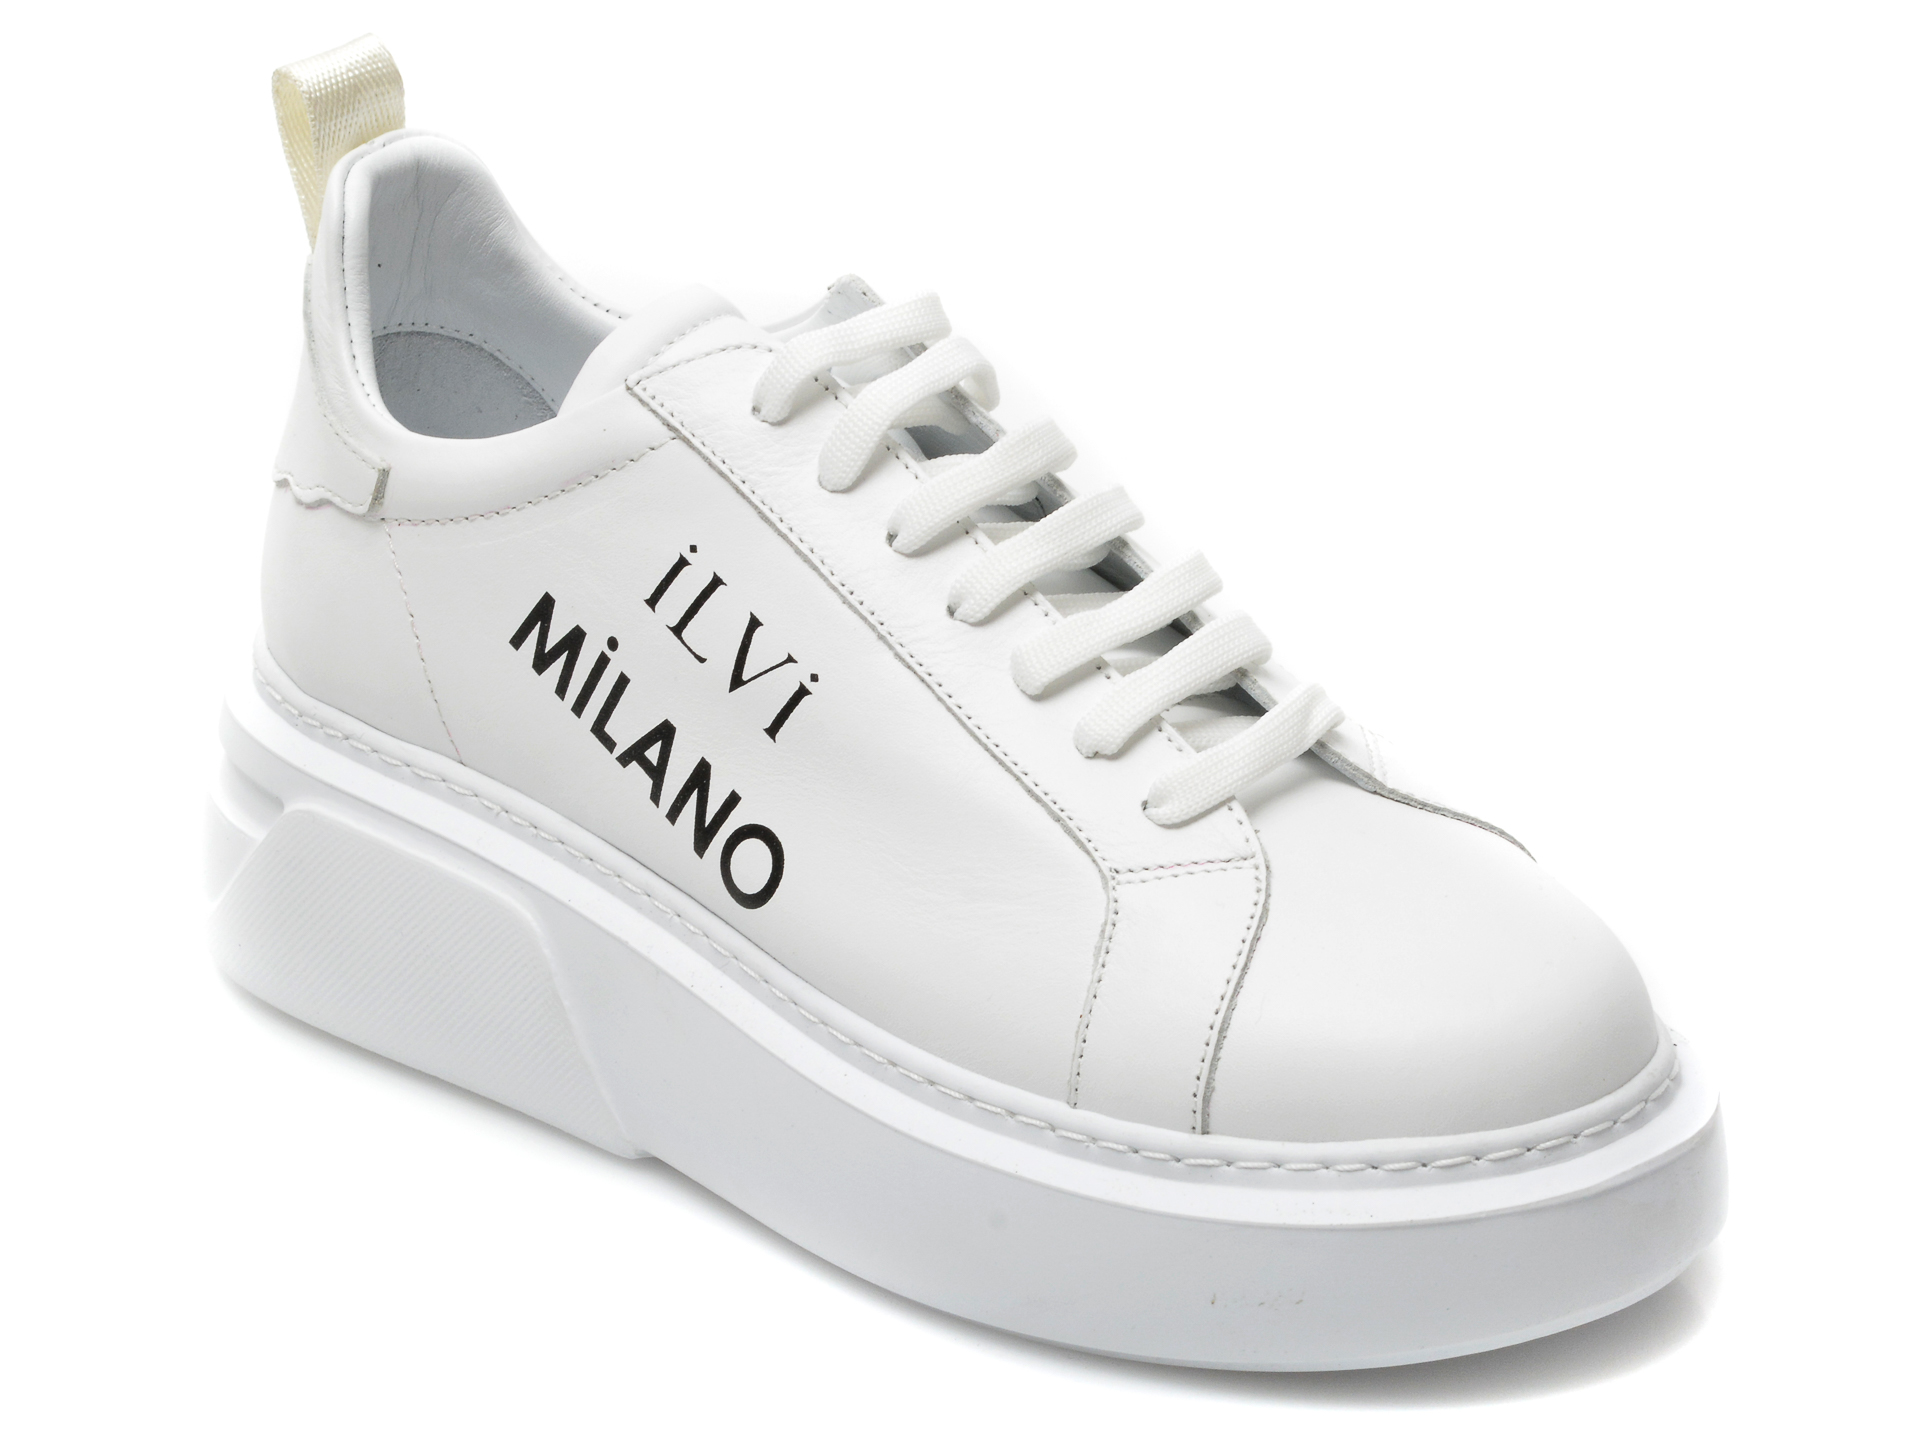 Pantofi sport ILVI albi, 228, din piele naturala ILVI